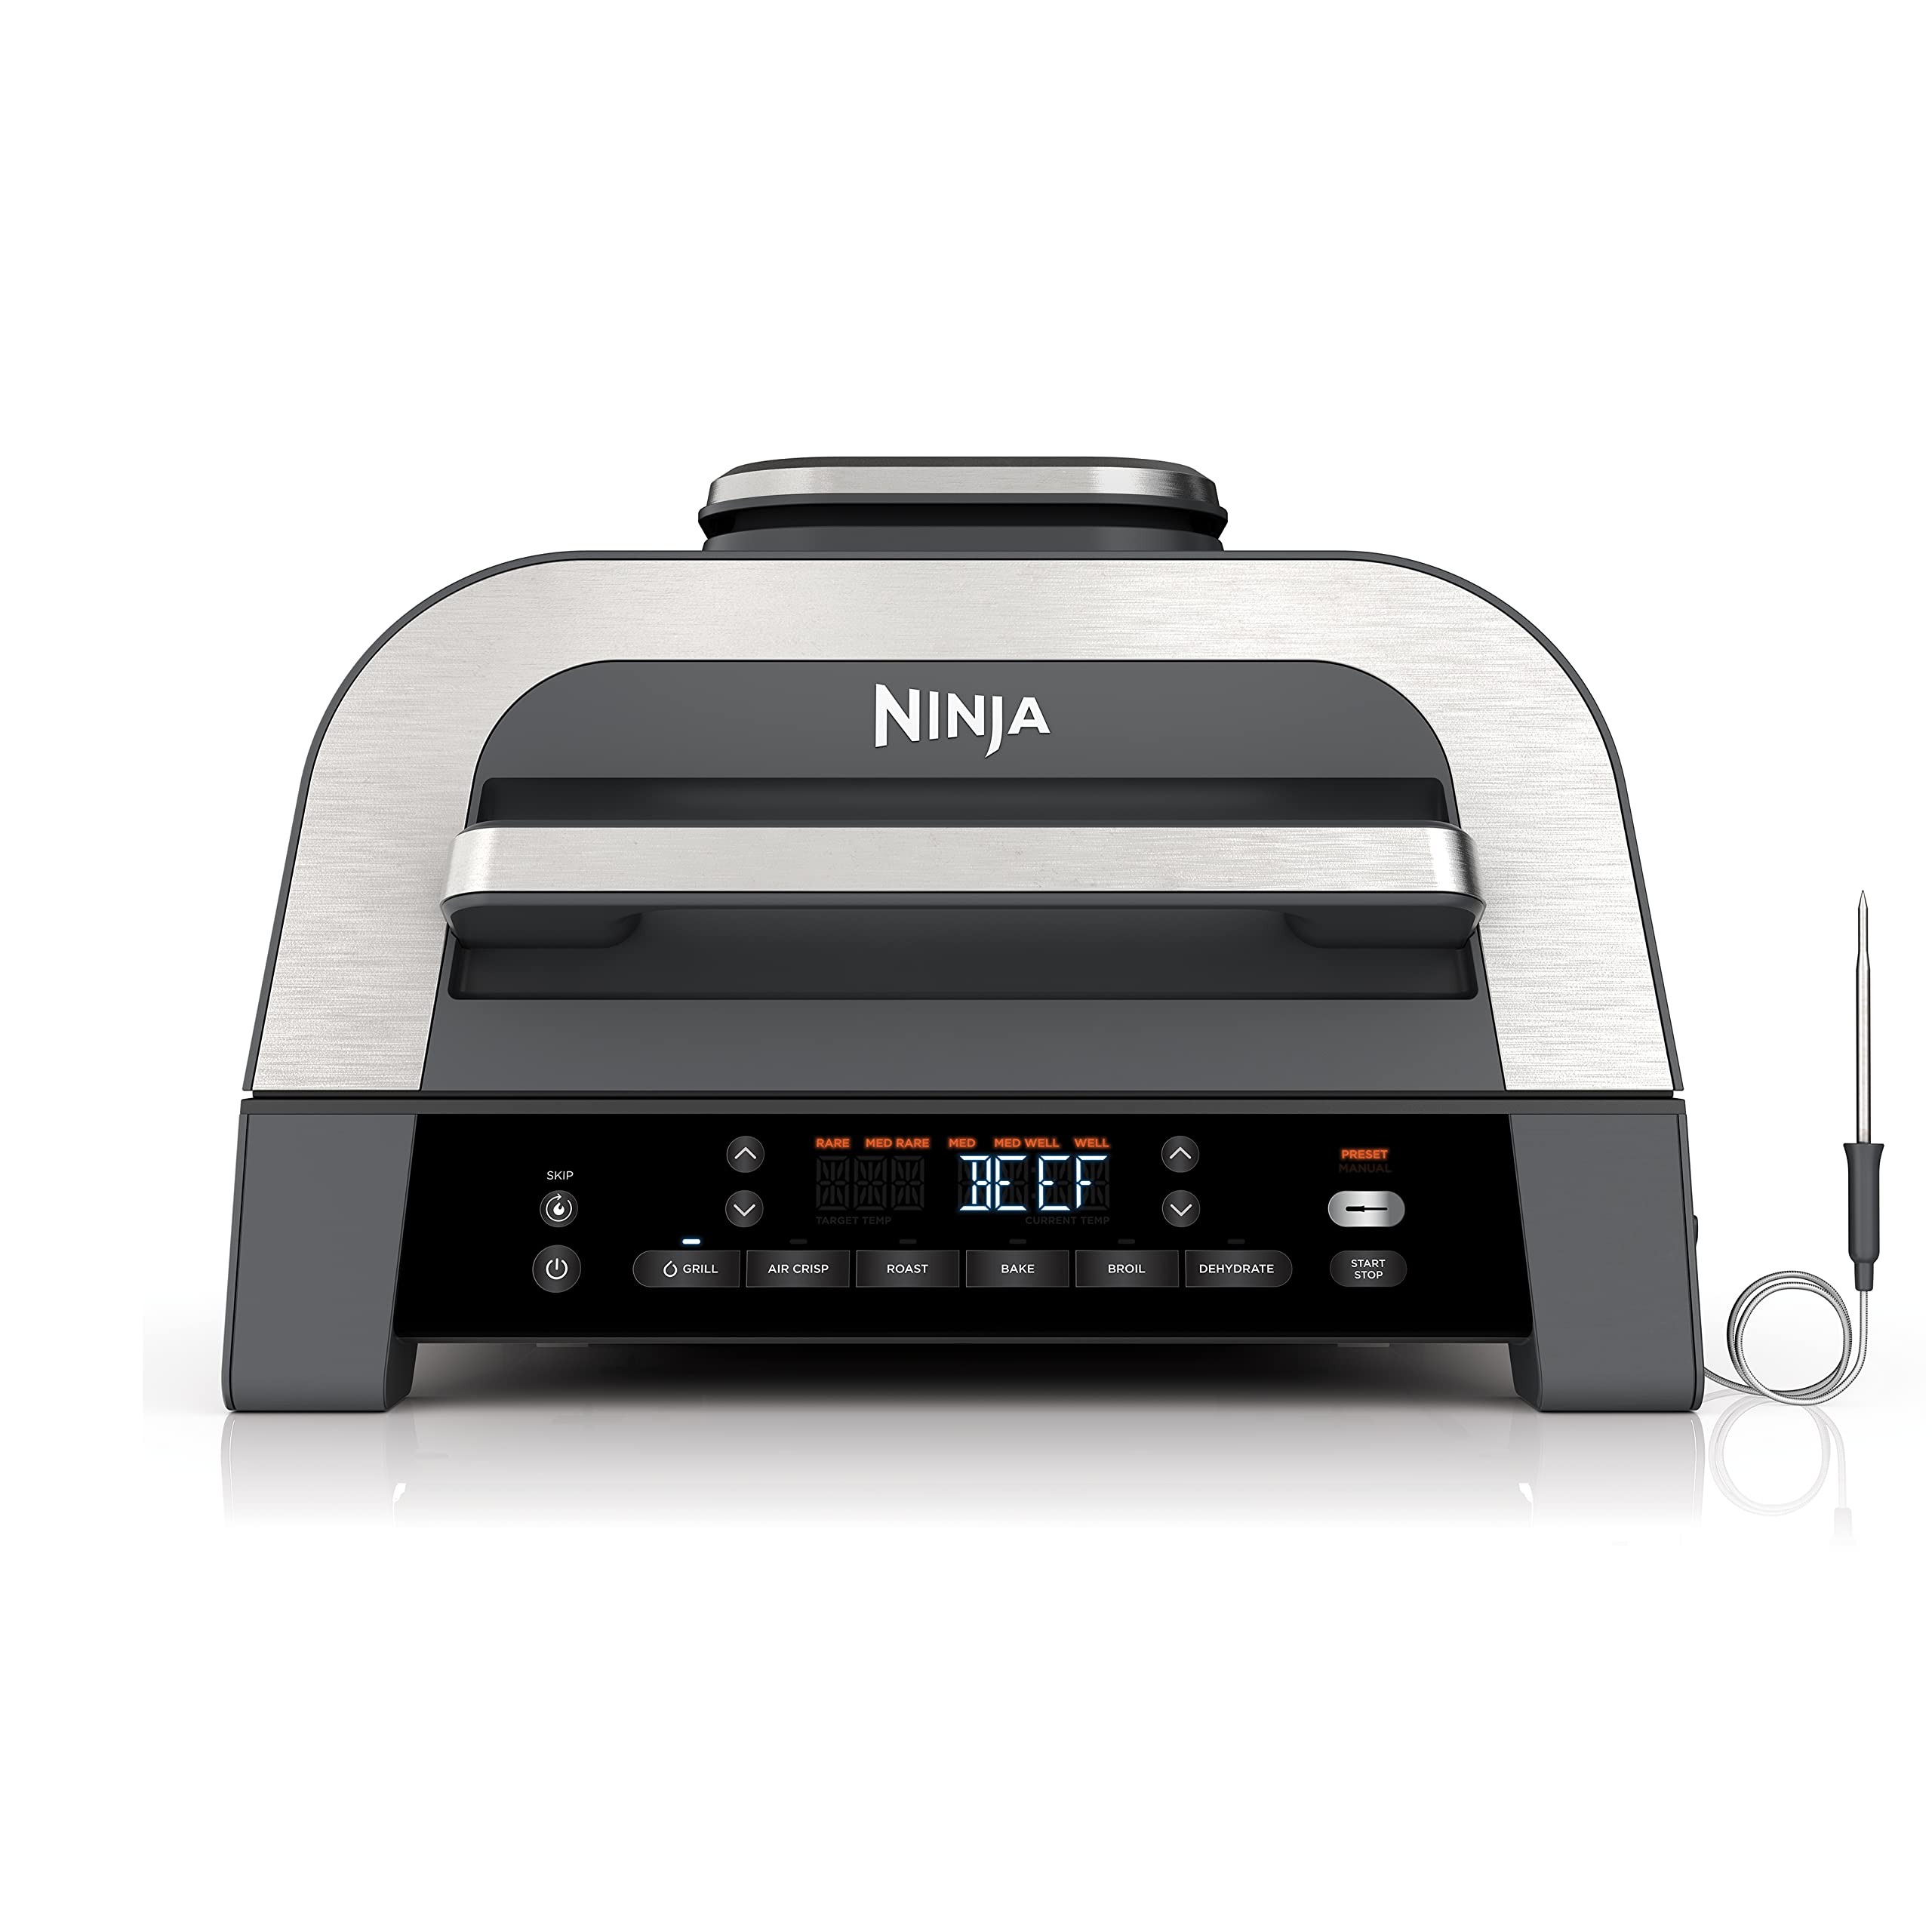  Ninja DG551 Foodi Smart XL 6-in-1 屋内グリル、エアフライ、ロースト、ベイク、ブロイル、脱水機能付き、Foodi スマート温度計、第 2 世代、ブラック/シルバー...